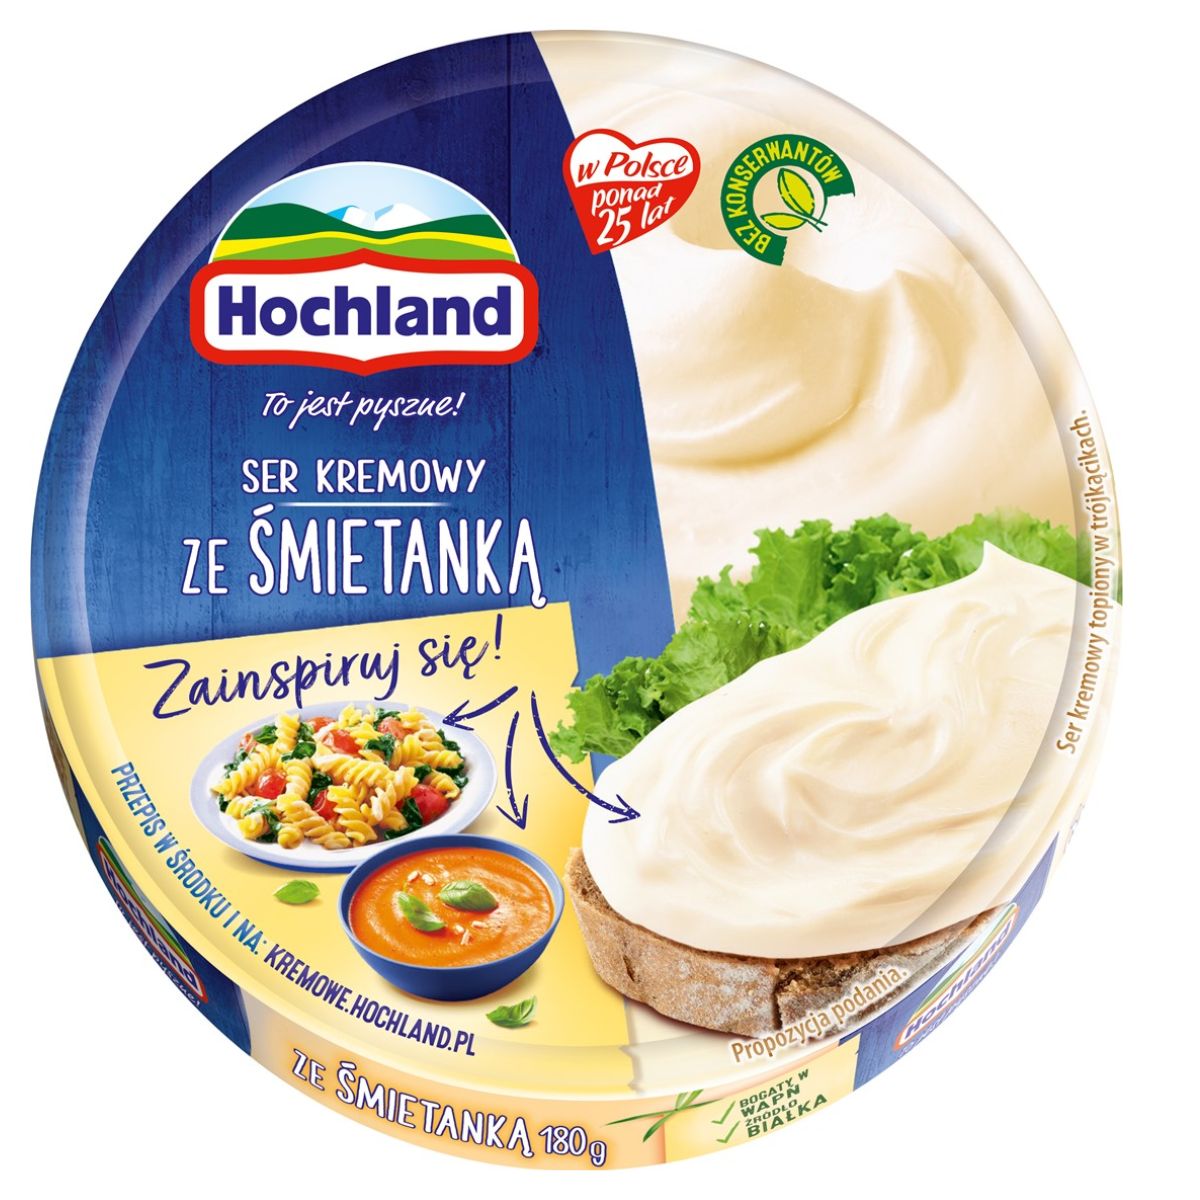 A tin of Hochland - Soft Creamy Cheese - 180g.